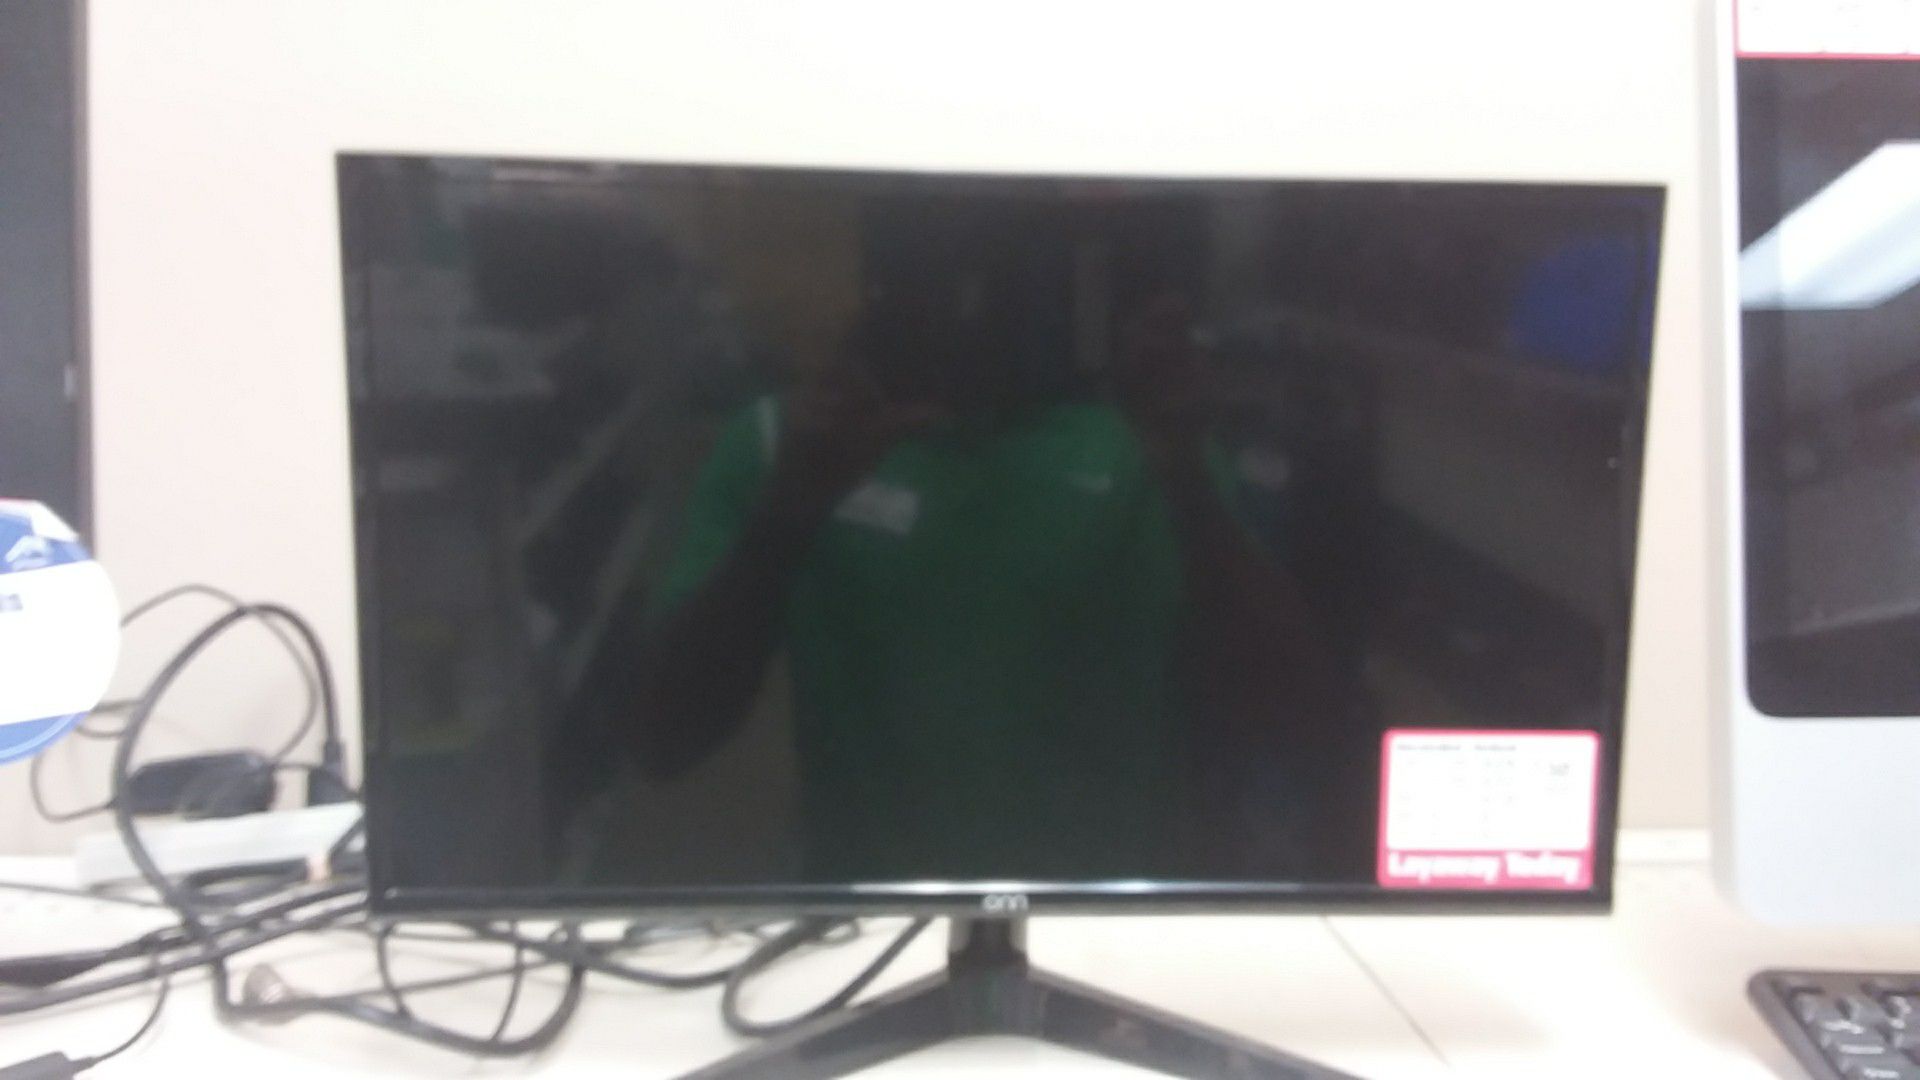 Onn 22inch computer monitor